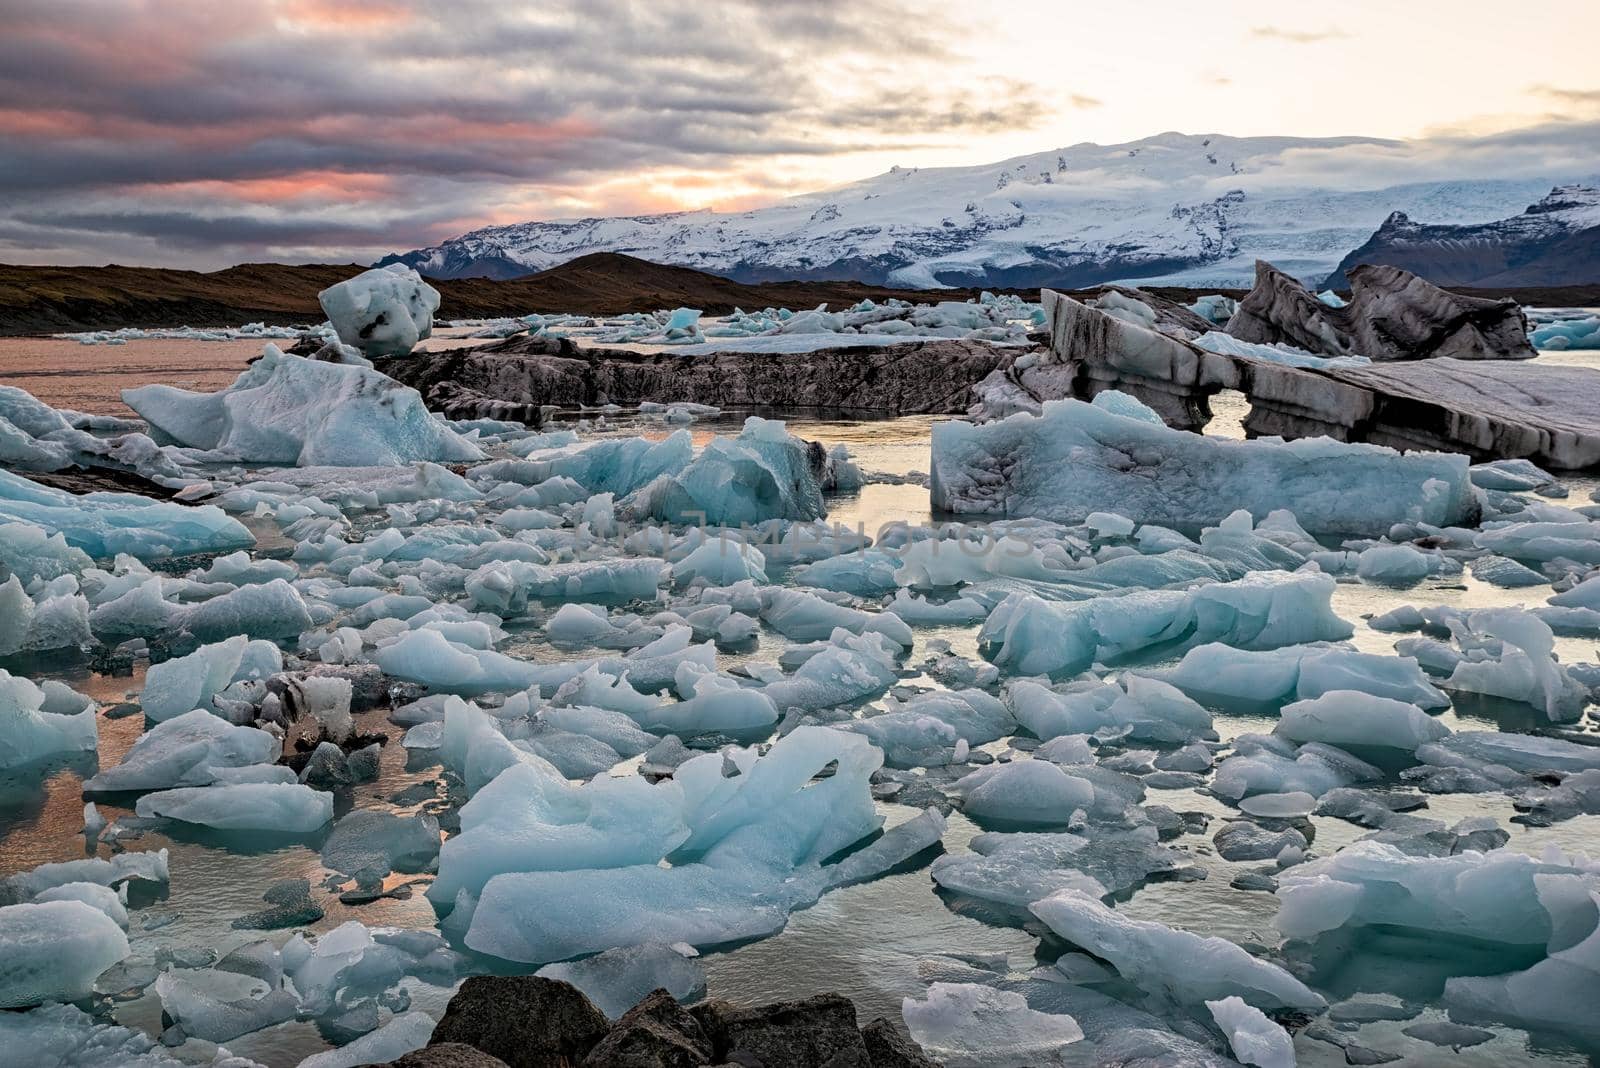 Colorful sunset in Jokulsarlon glacier lagoon, Iceland by LuigiMorbidelli